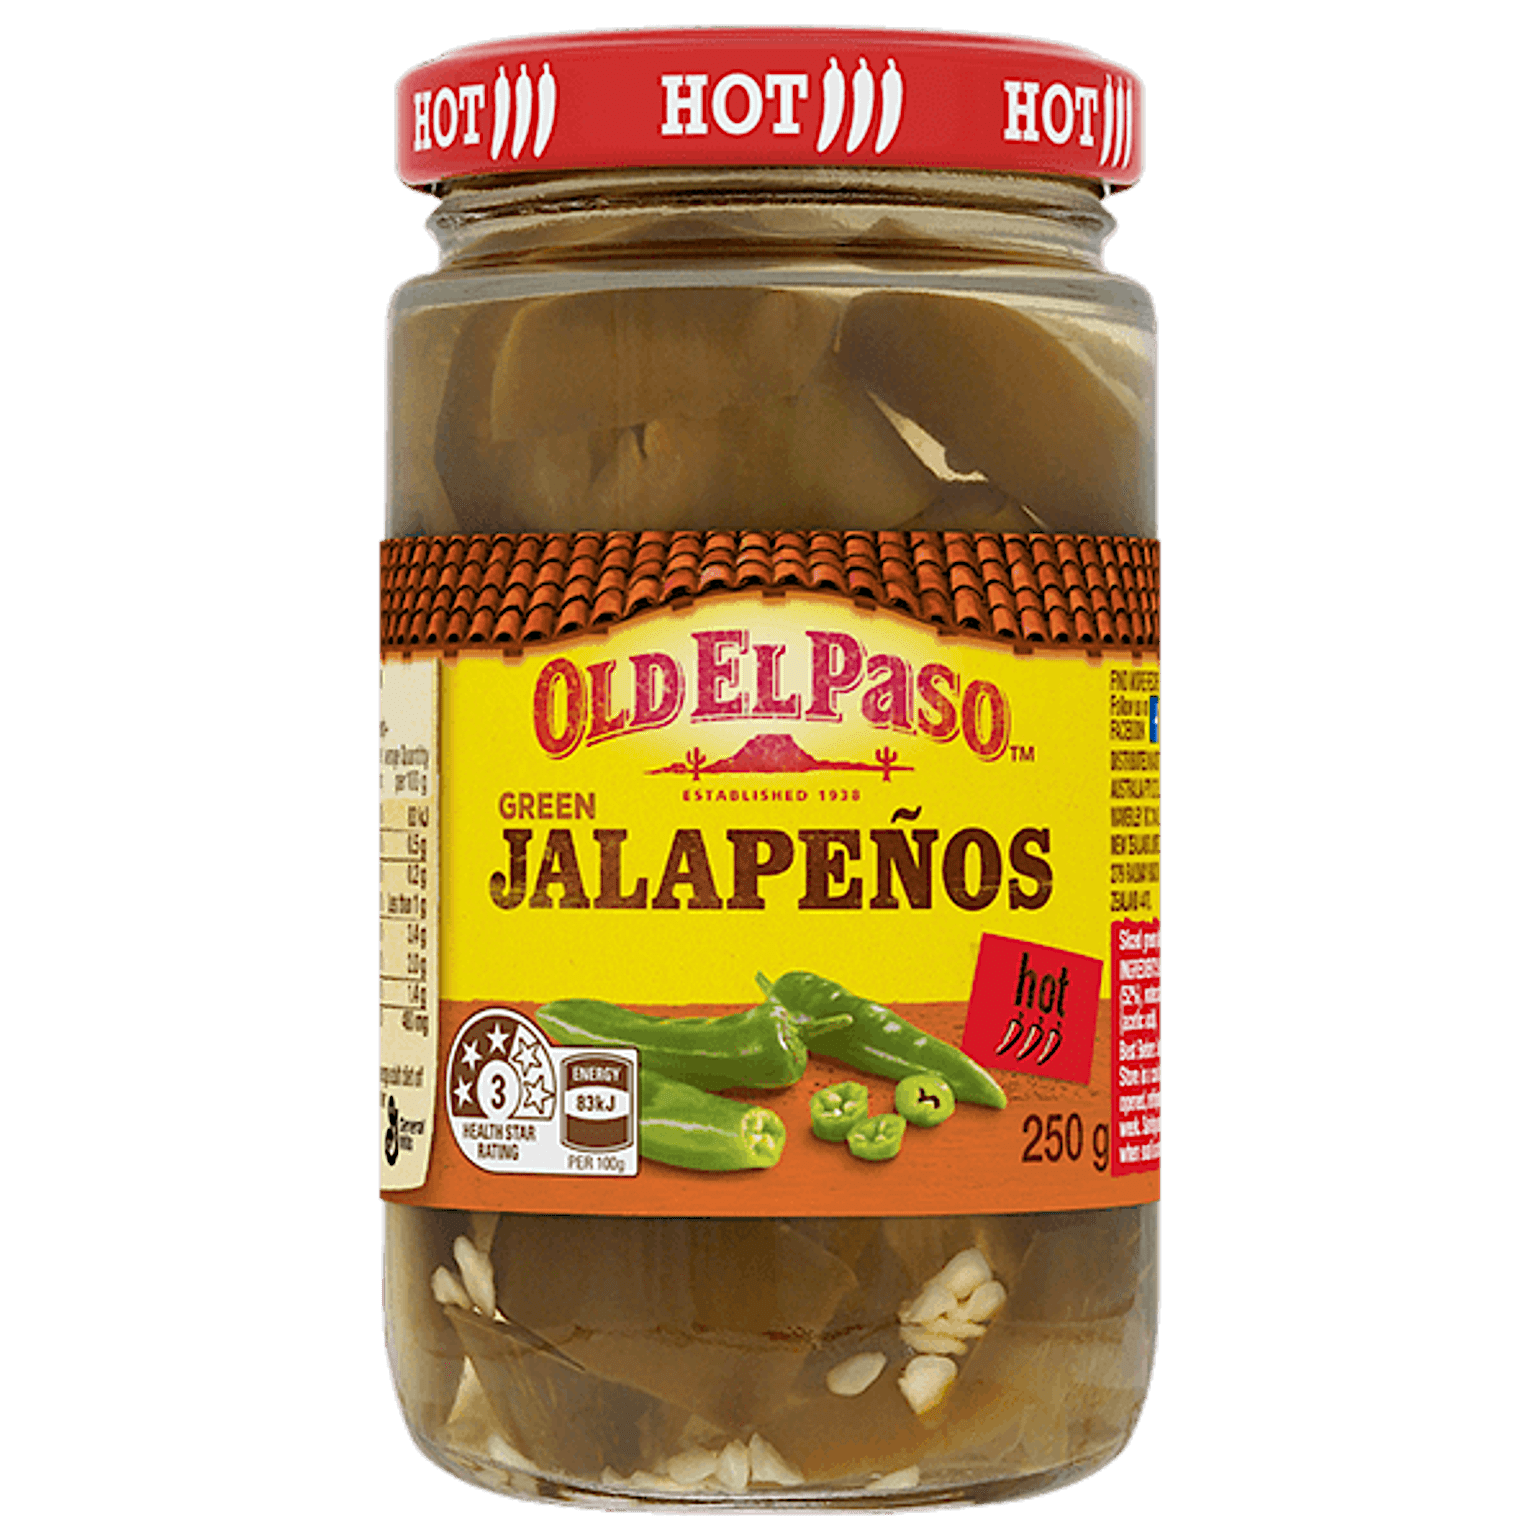 a glass jar of Old El Paso's hot sliced green jalapenos (250g)